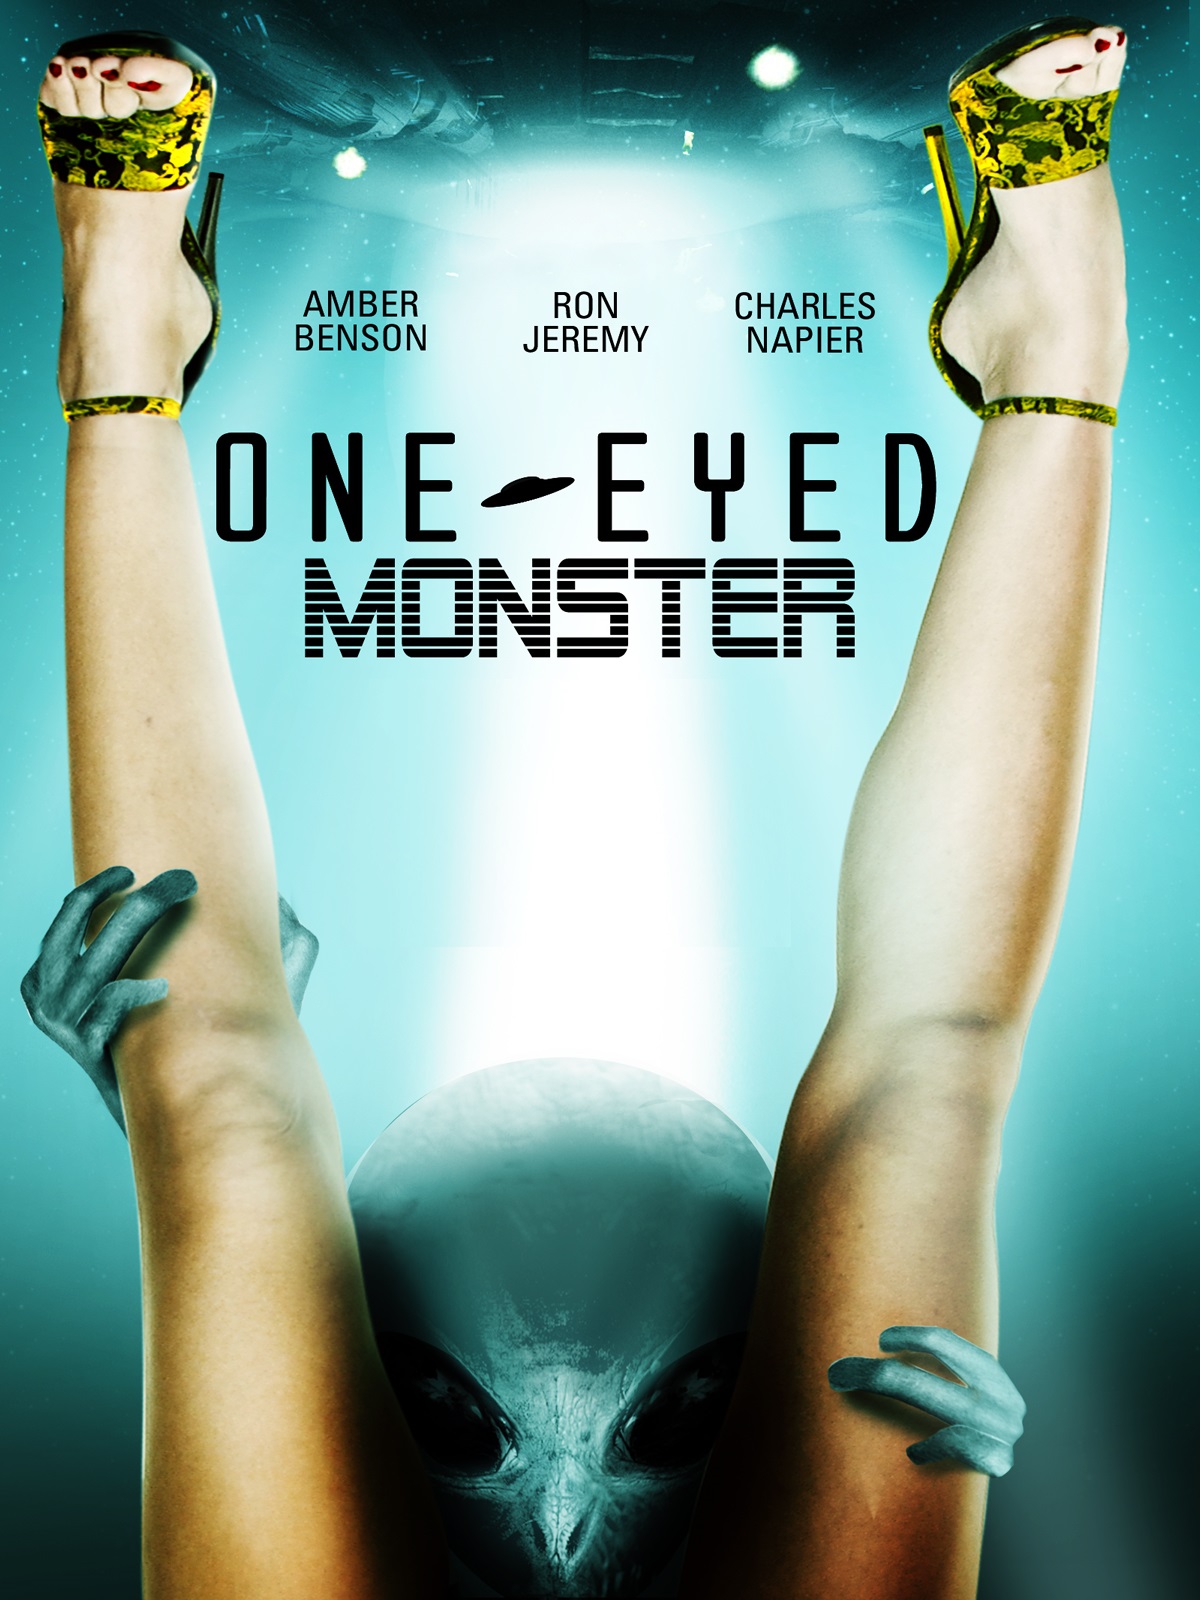 One Eyed Monster [Sub-ITA] (2008)